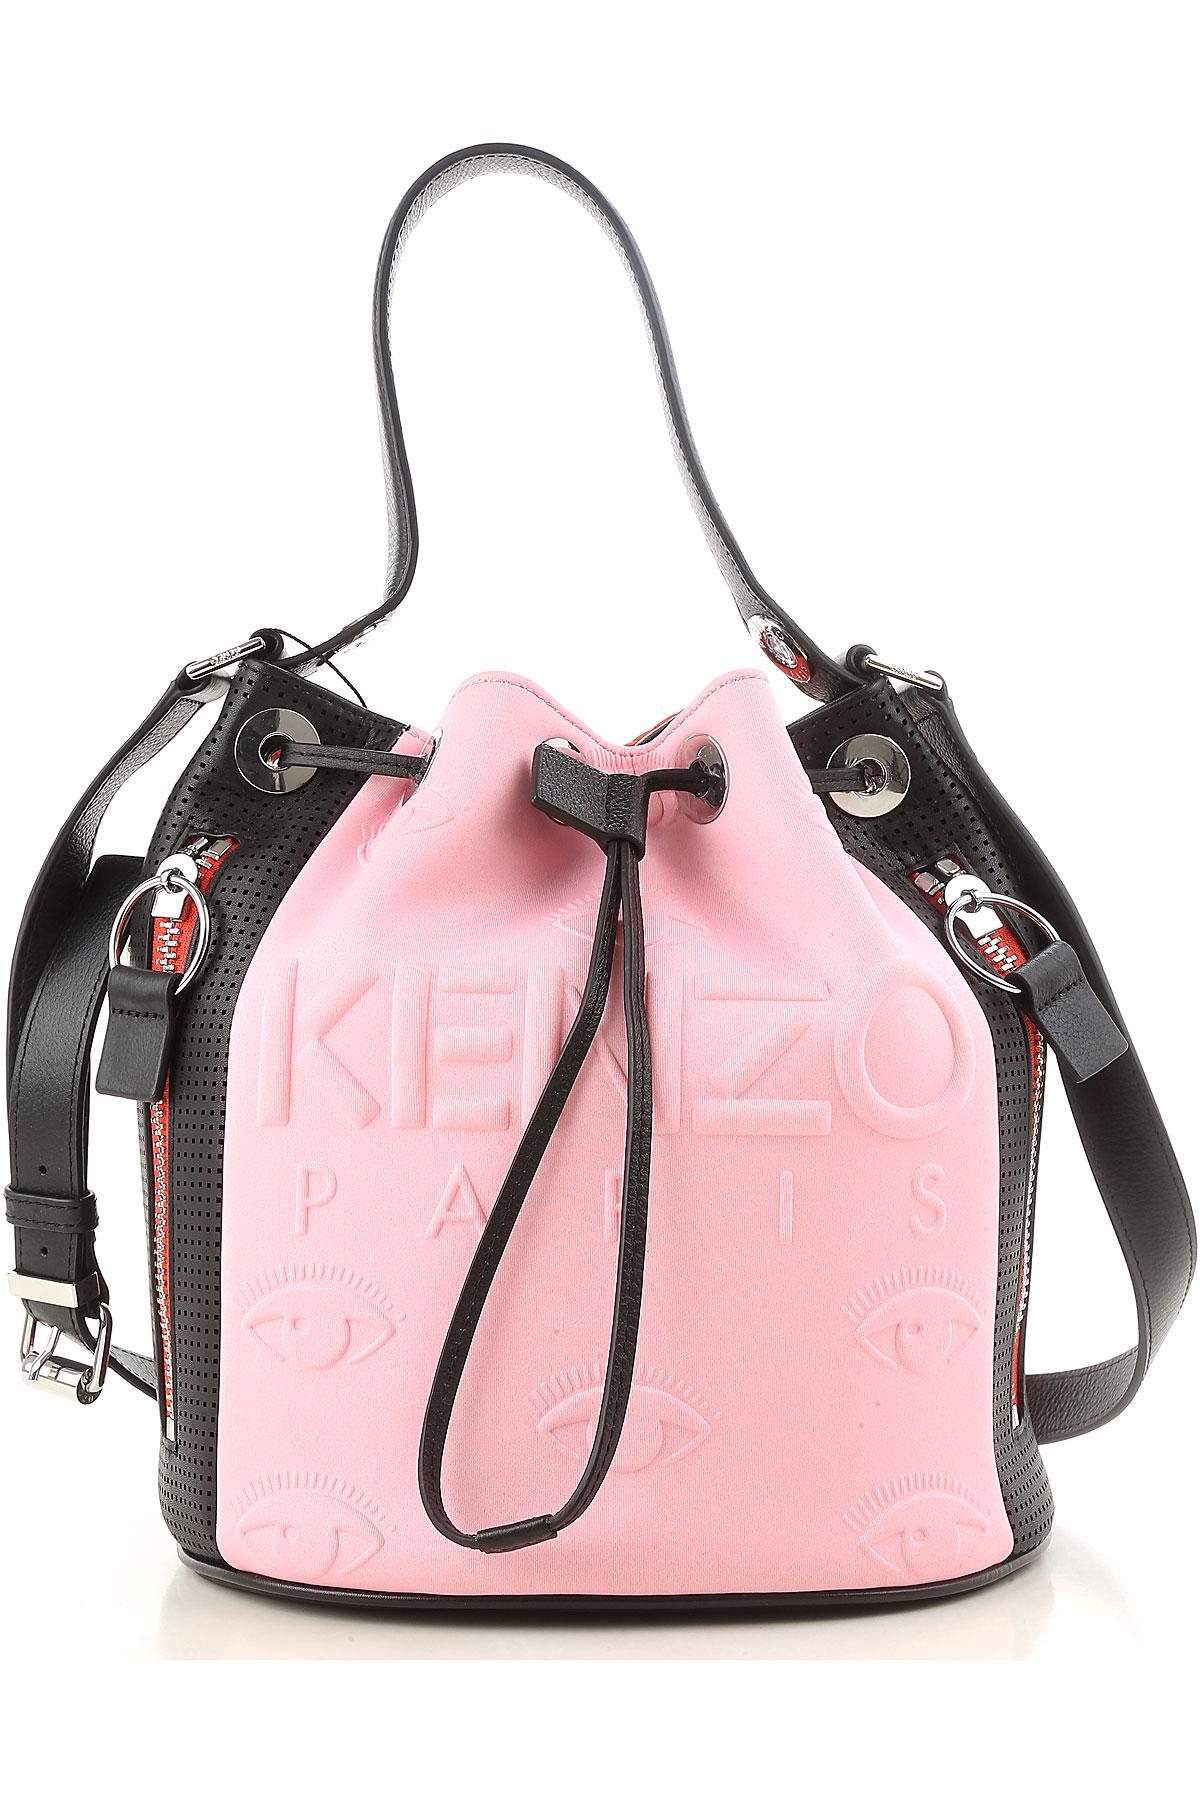 kenzo handbags